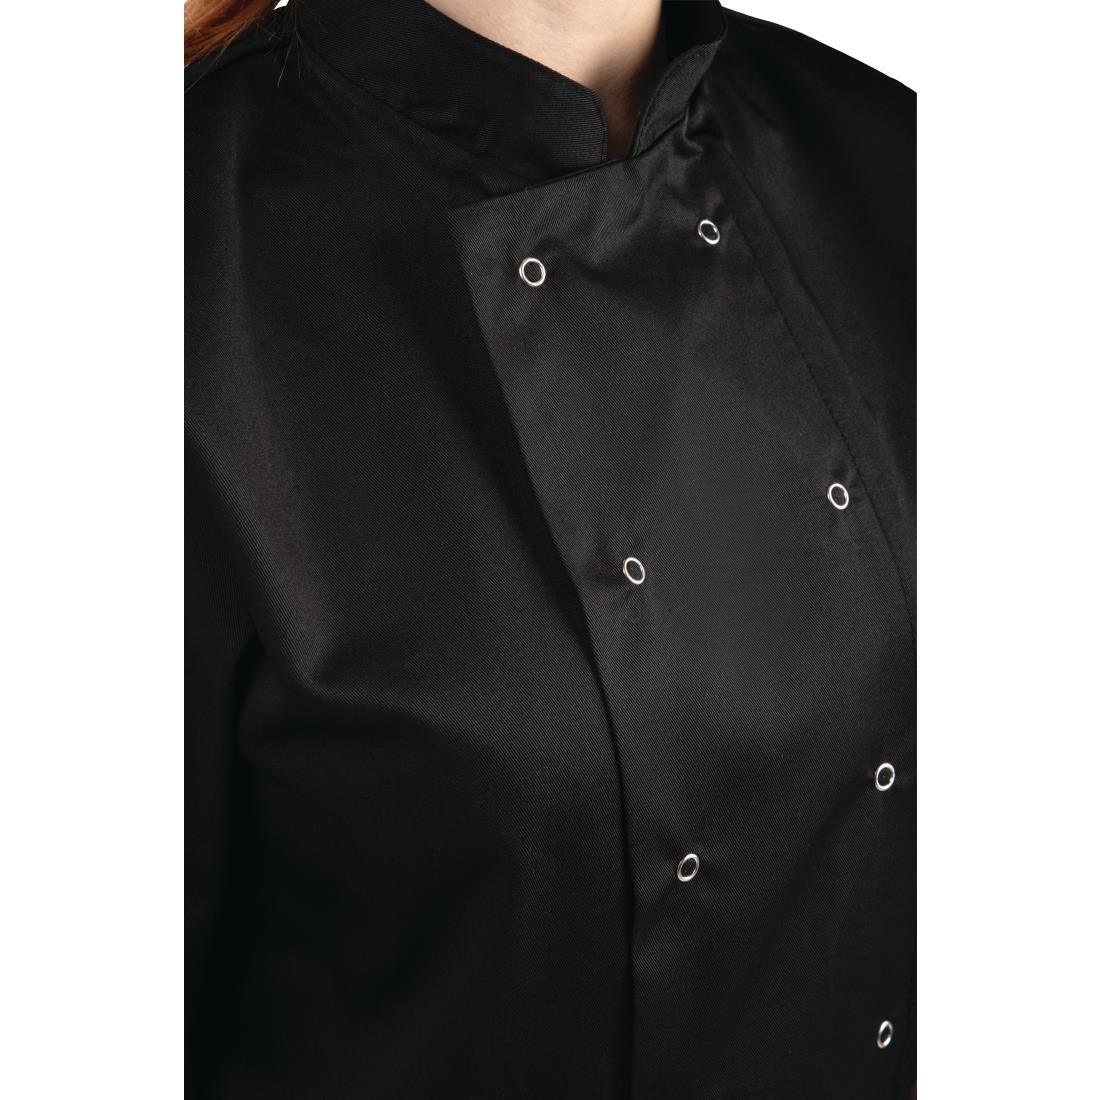 Whites Vegas Unisex Chefs Jacket Short Sleeve Black - HospoStore